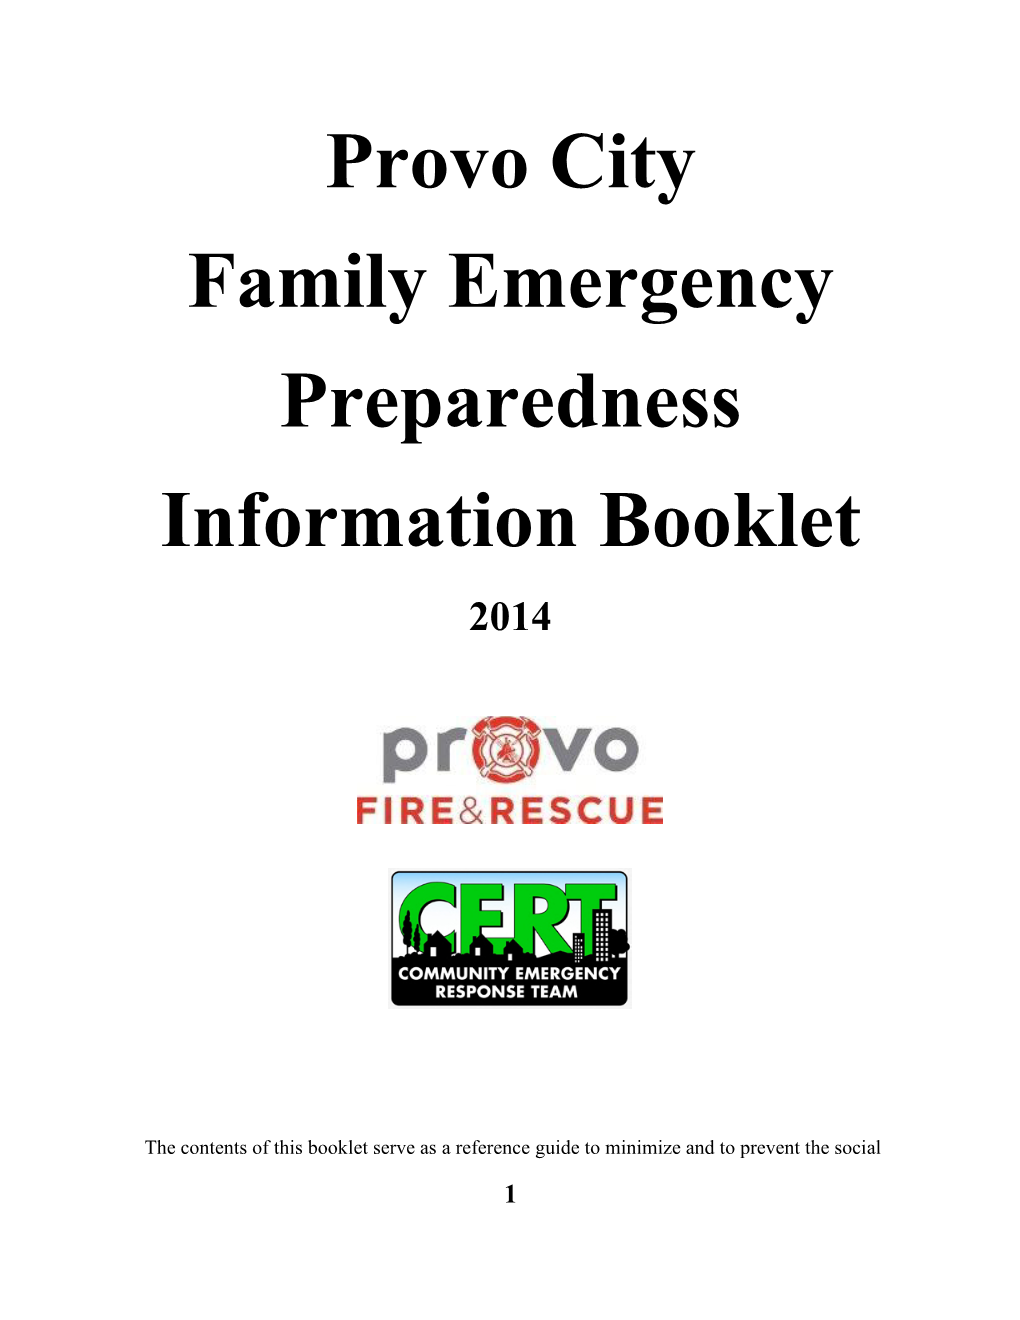 Provo City Family Emergency Preparedness Information Booklet 2014